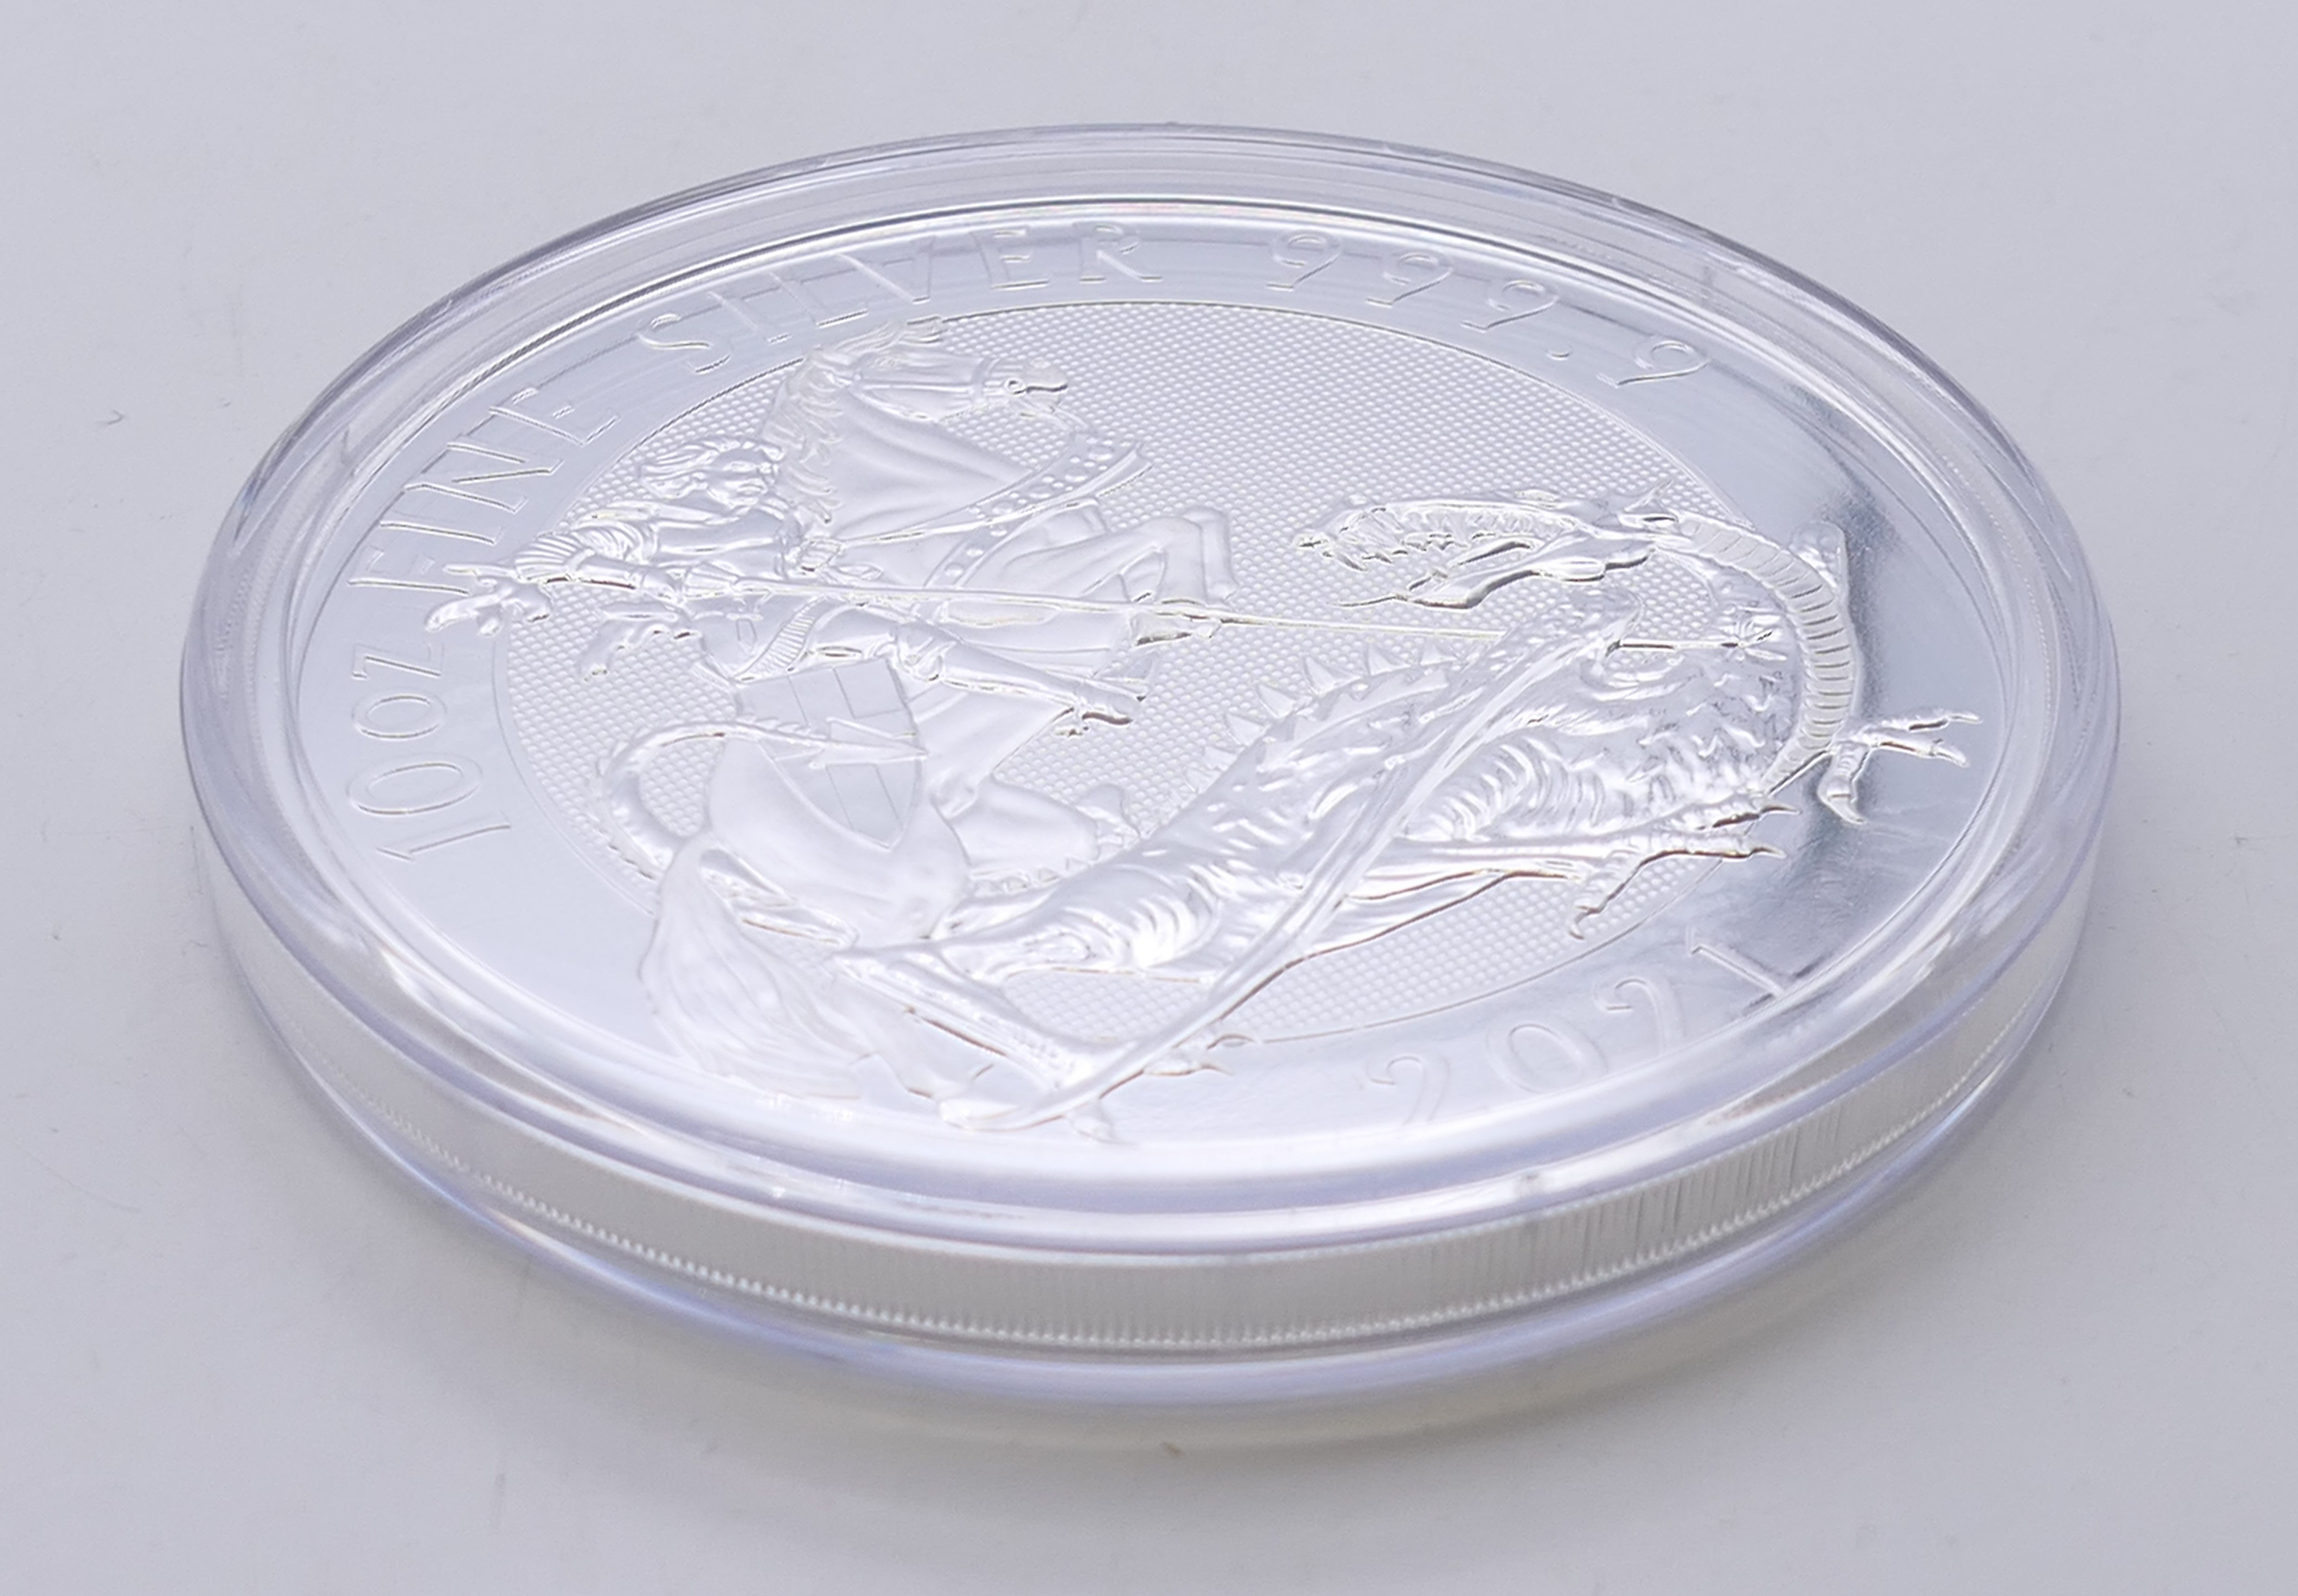 A 2021 10oz fine silver 10 pound coin. - Image 2 of 4